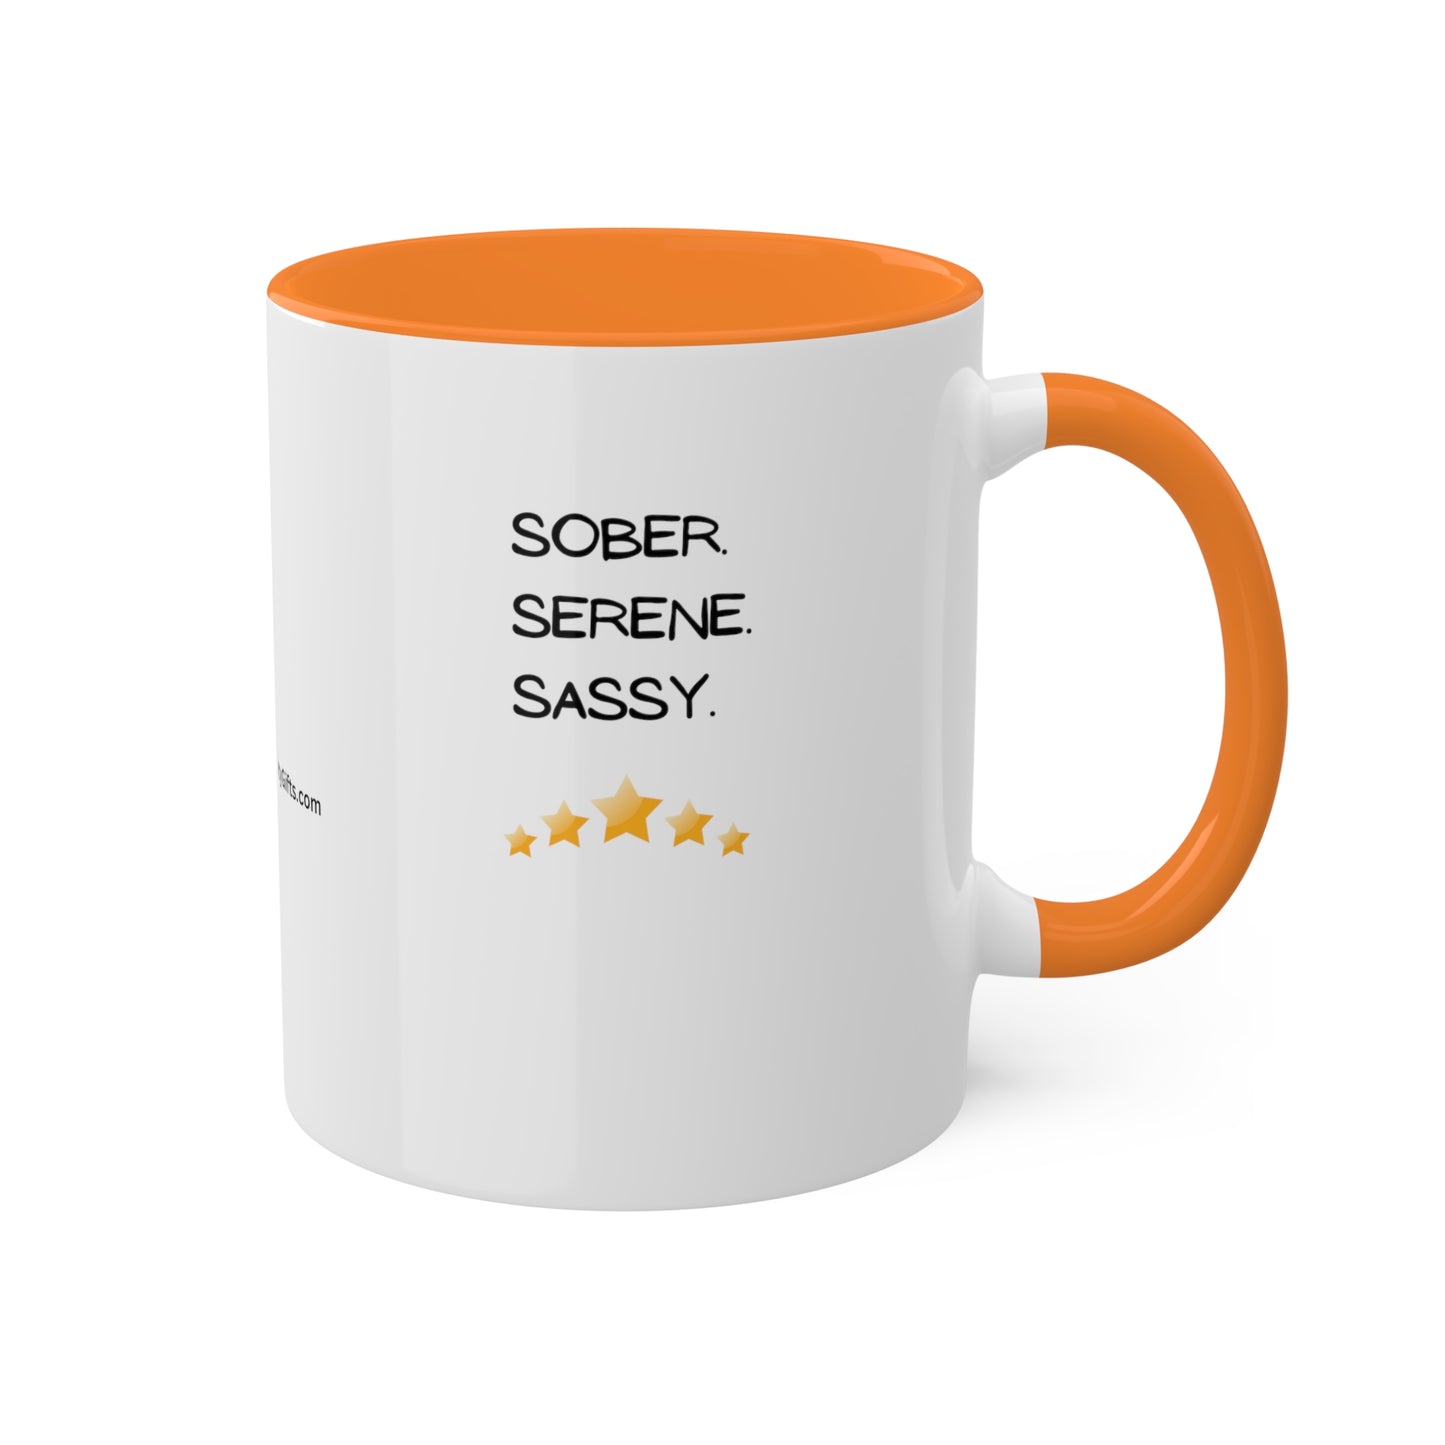 "Sober. Serene. Sassy" Coffee Mug 11 oz.